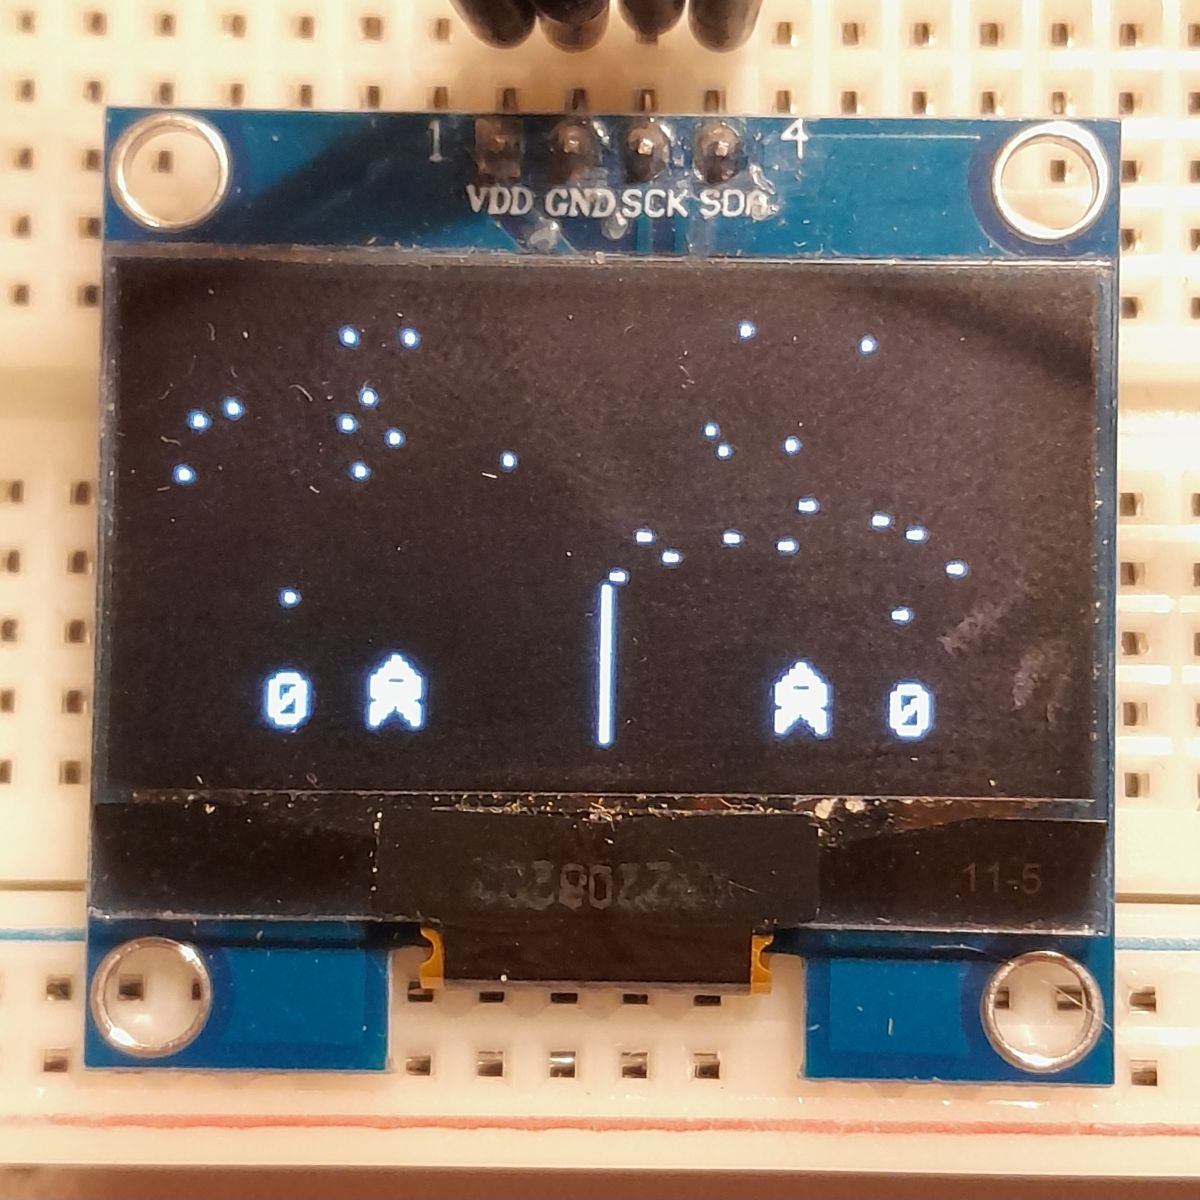 Arduino version of atari space race